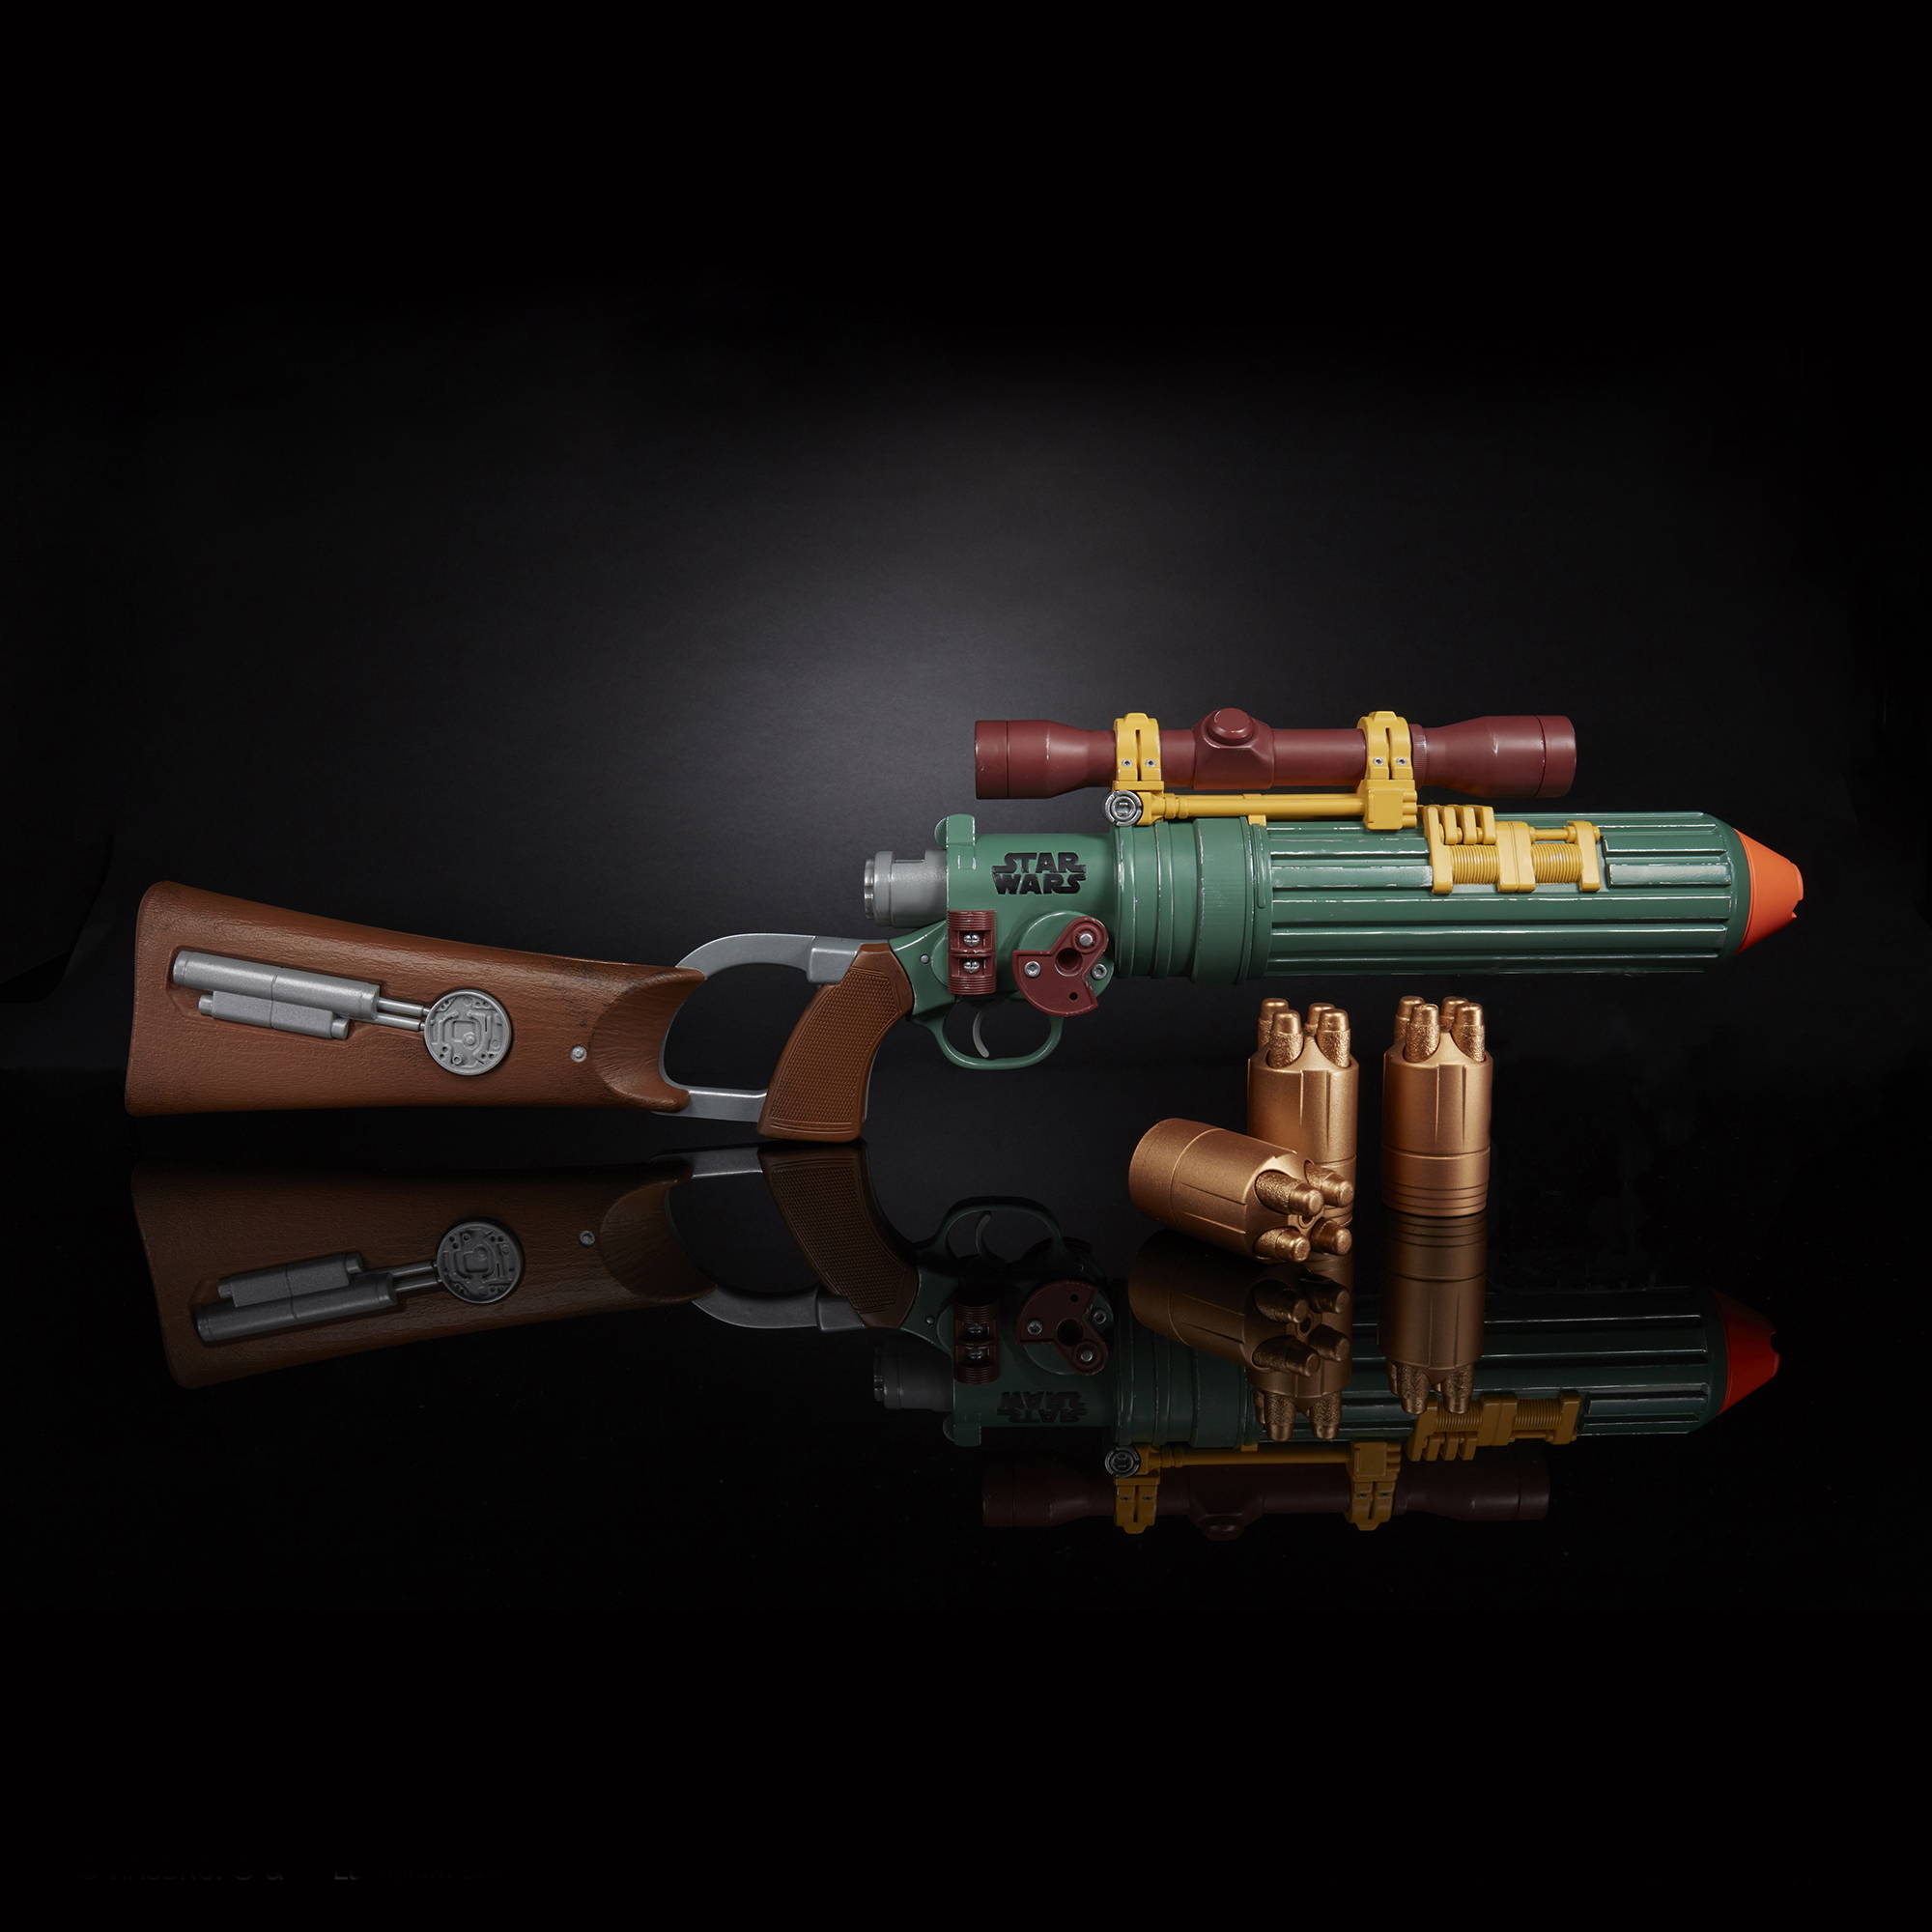 Nerf Star Wars Boba Fett's EE-3 Blaster – Pulse